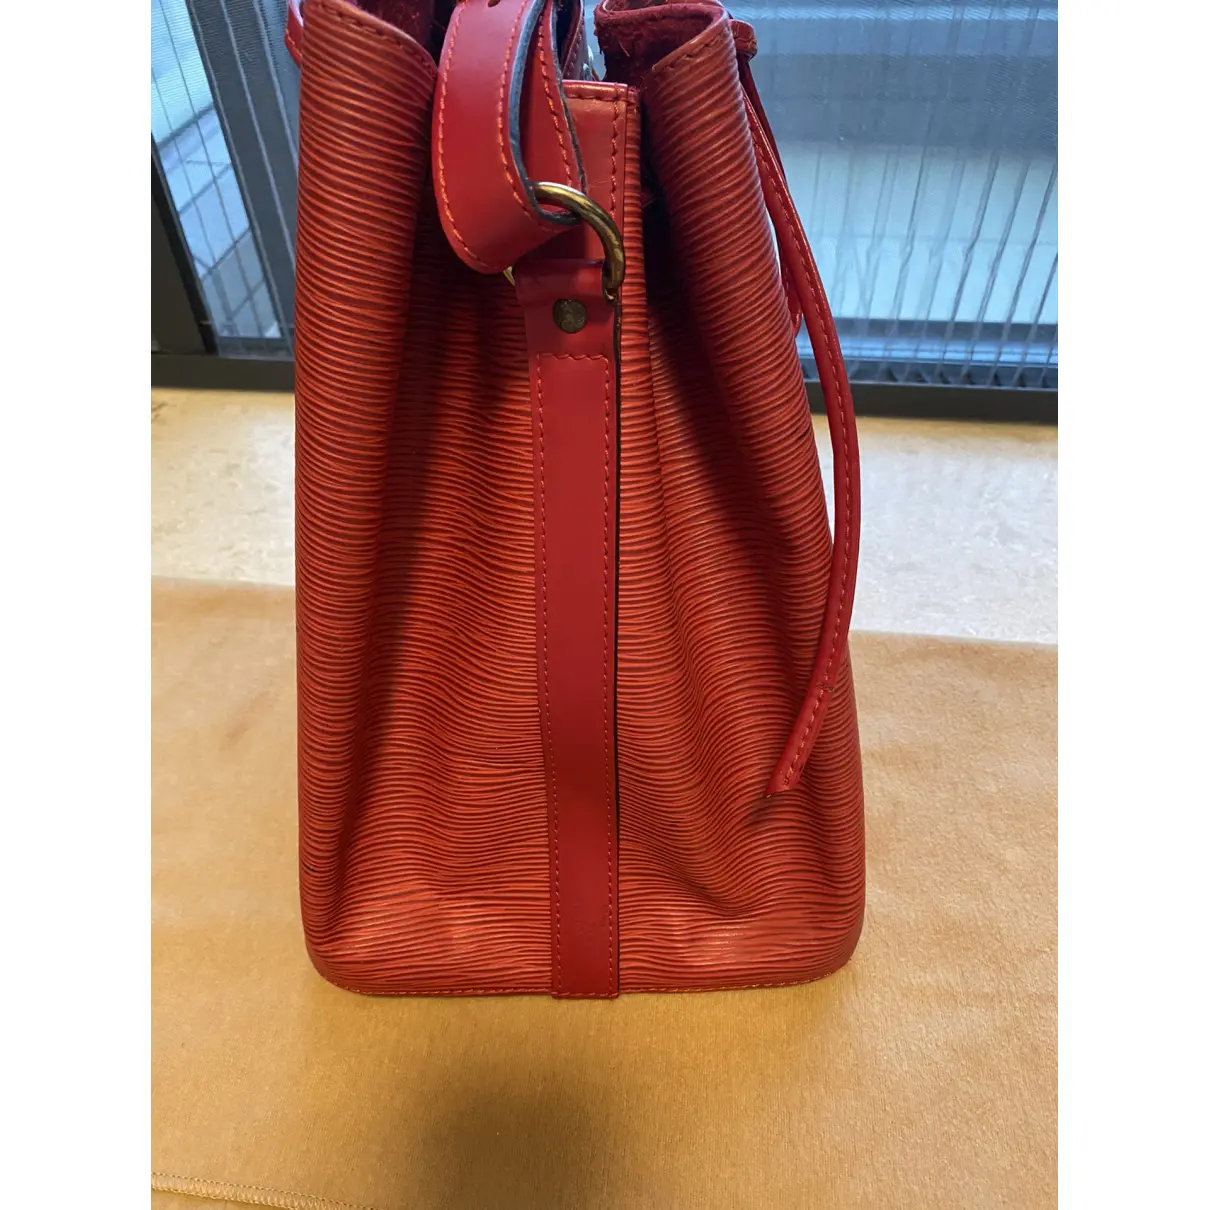 Buy Louis Vuitton Lockme Bucket leather handbag online